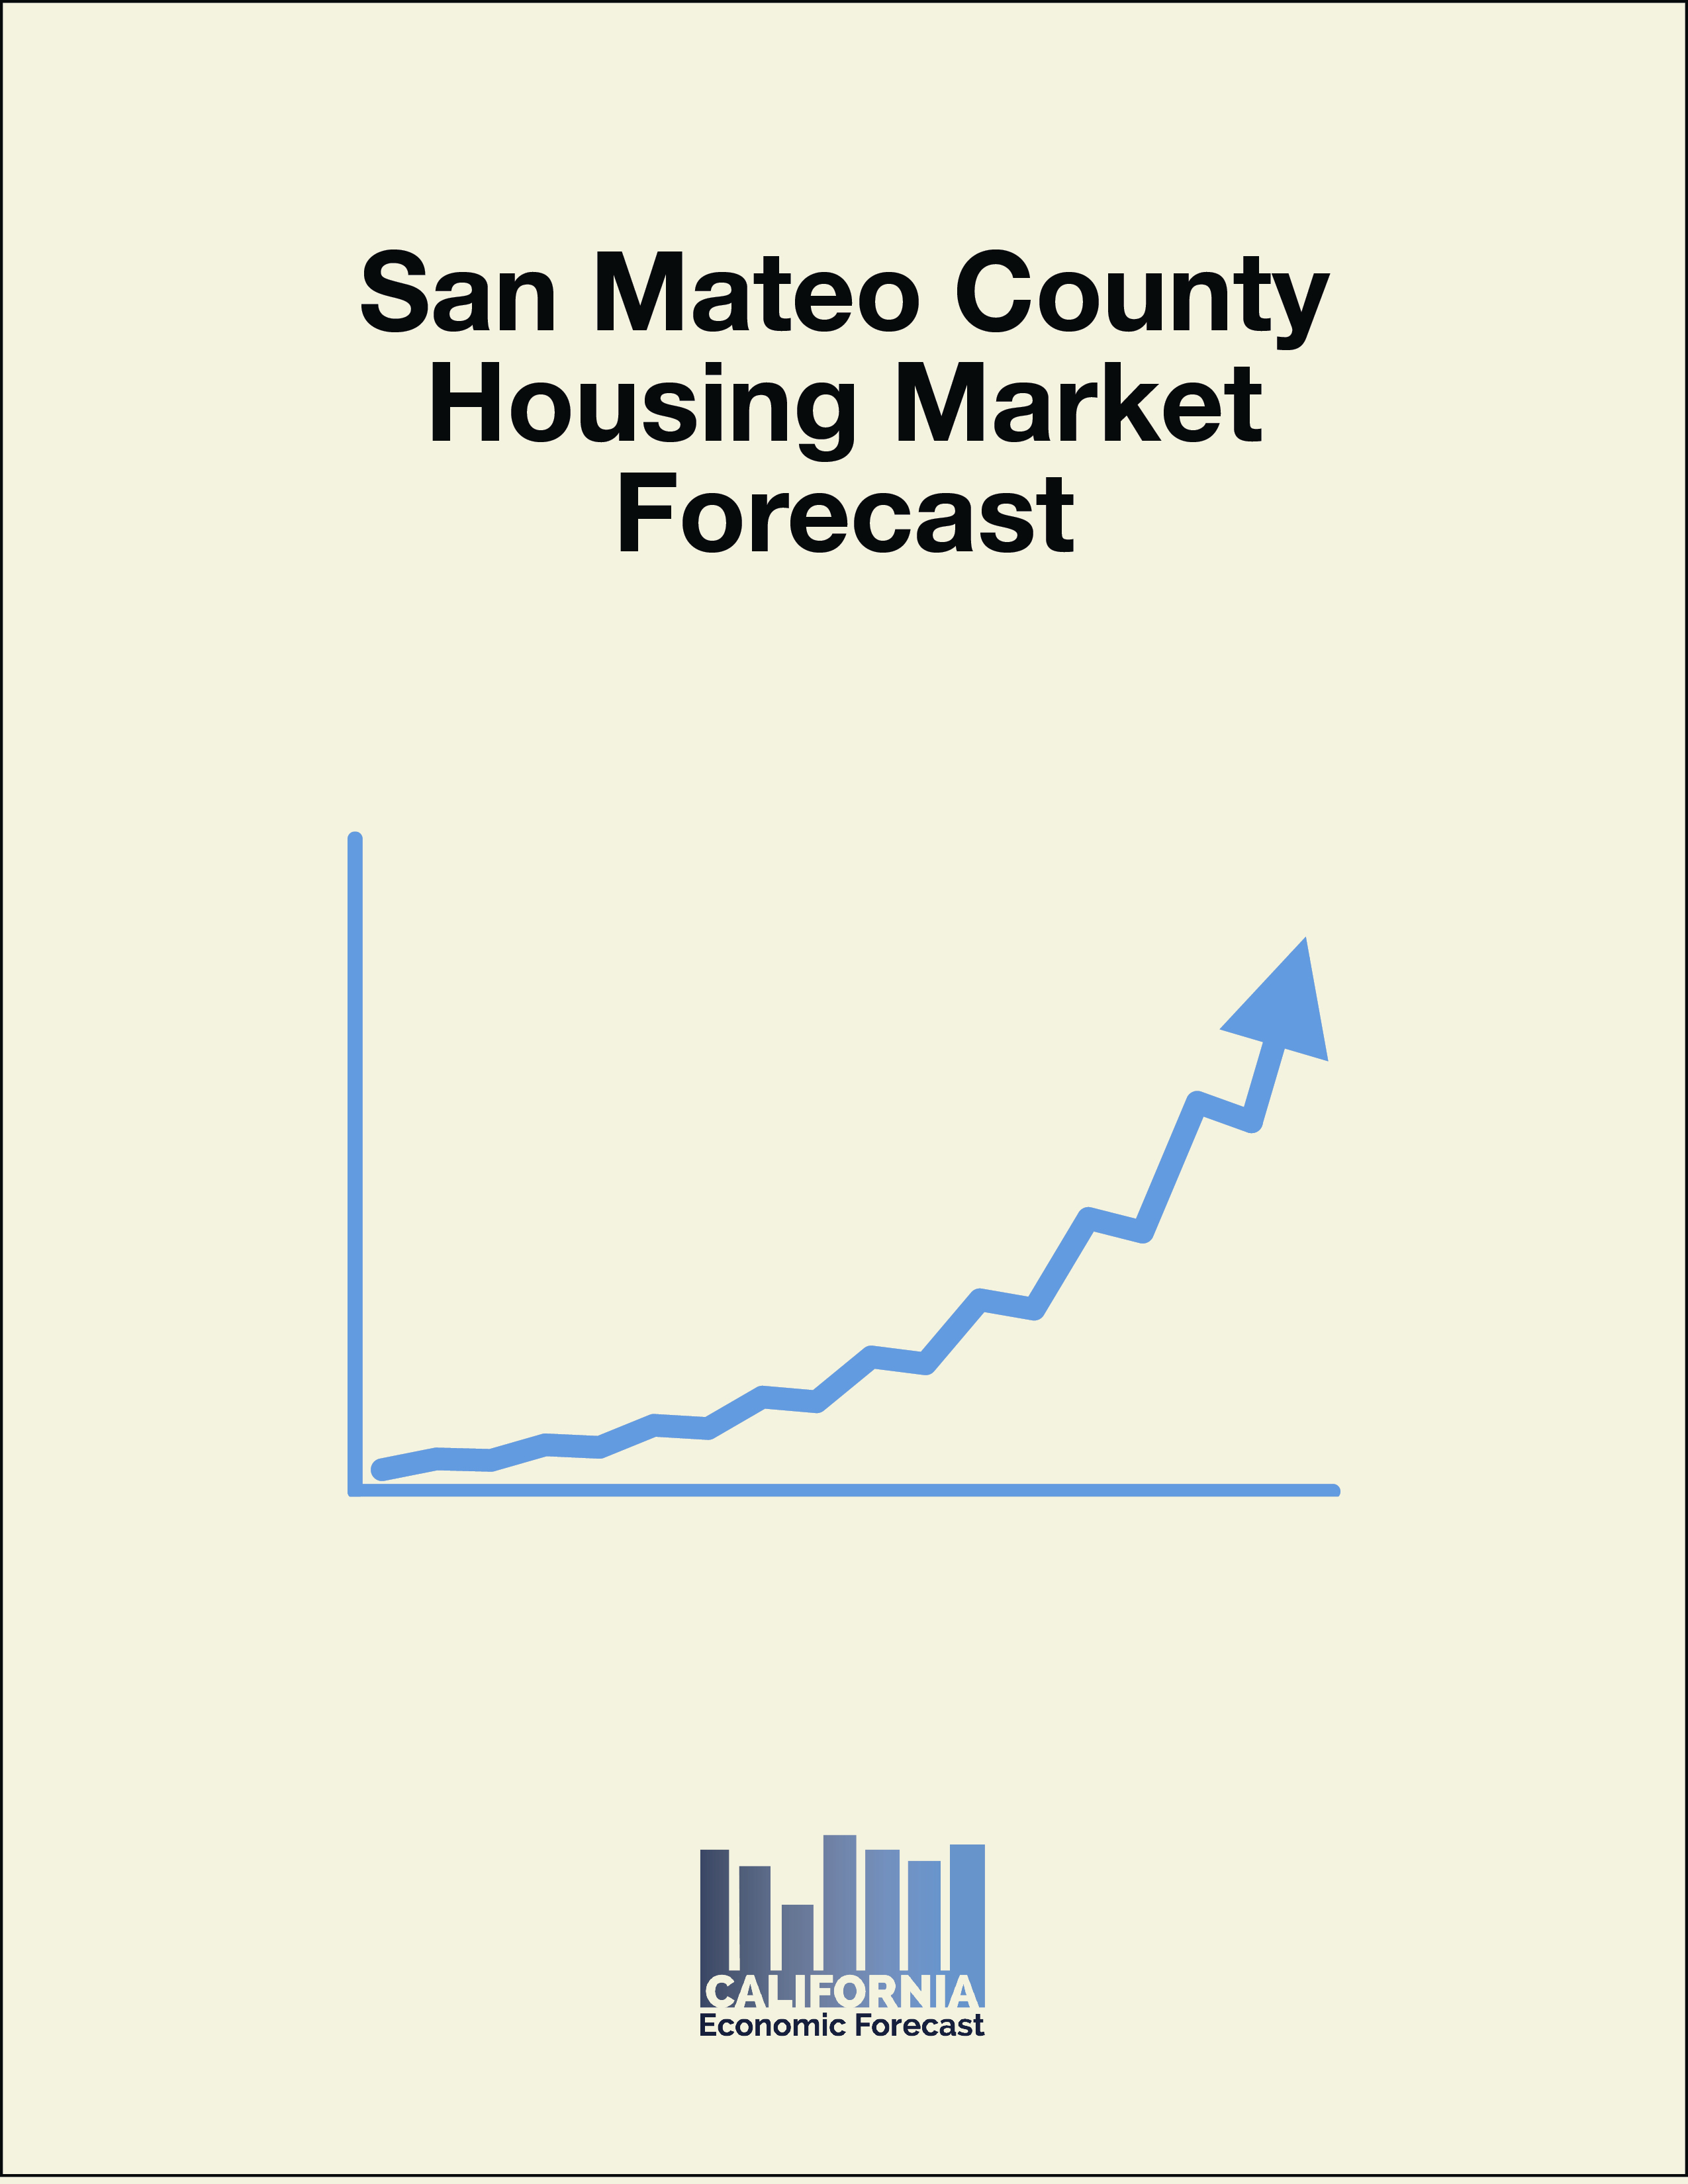 San Mateo County California Economic Forecast